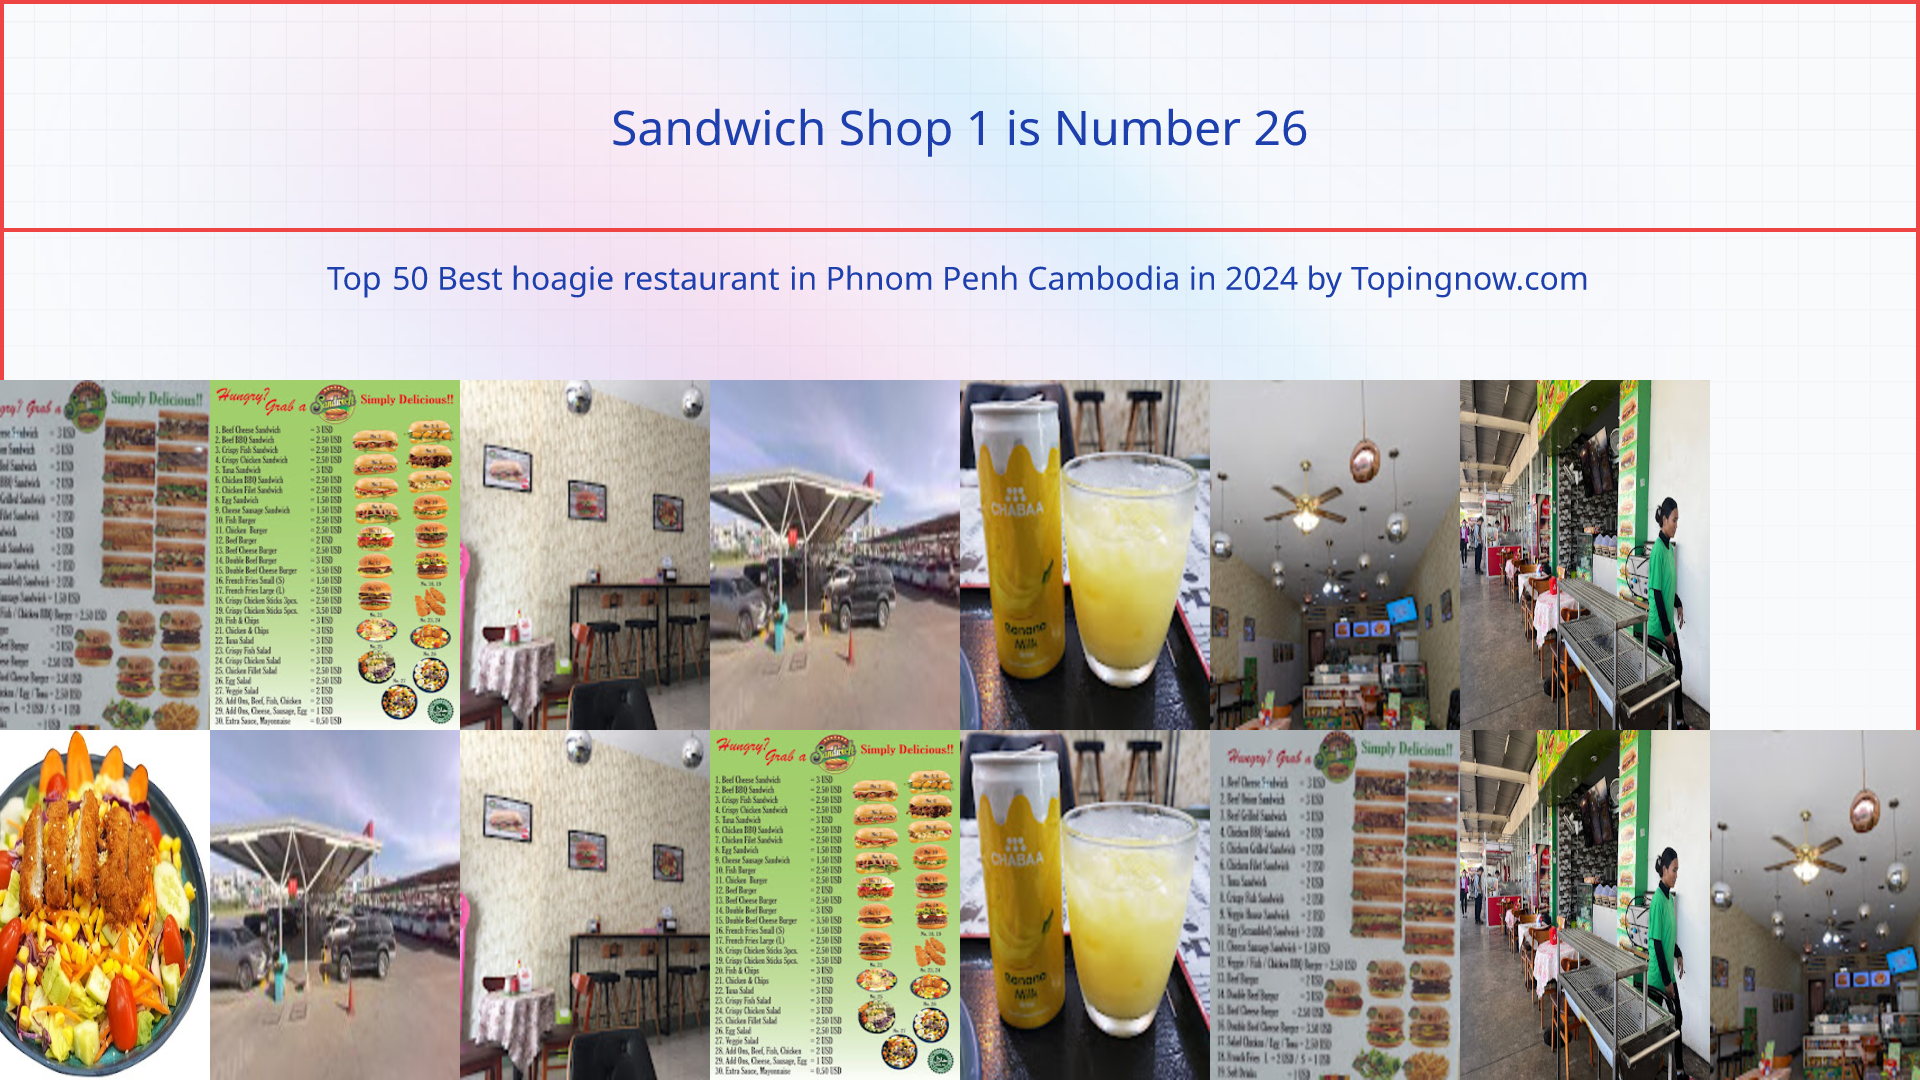 Sandwich Shop 1: Top 50 Best hoagie restaurant in Phnom Penh Cambodia in 2024